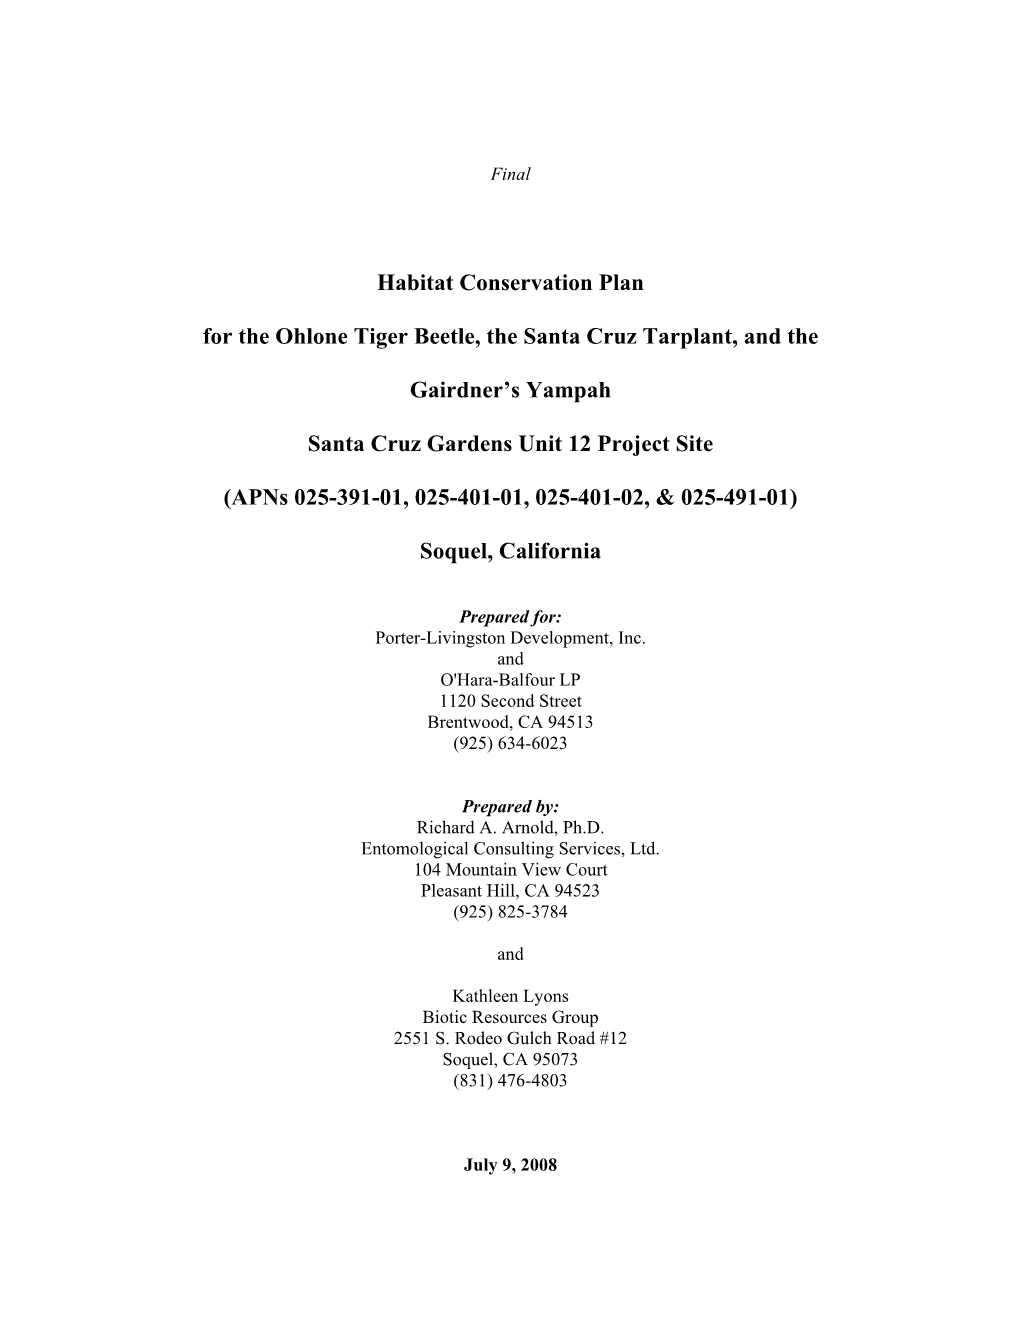 Habitat Conservation Plan for the Ohlone Tiger Beetle, the Santa Cruz Tarplant, and The